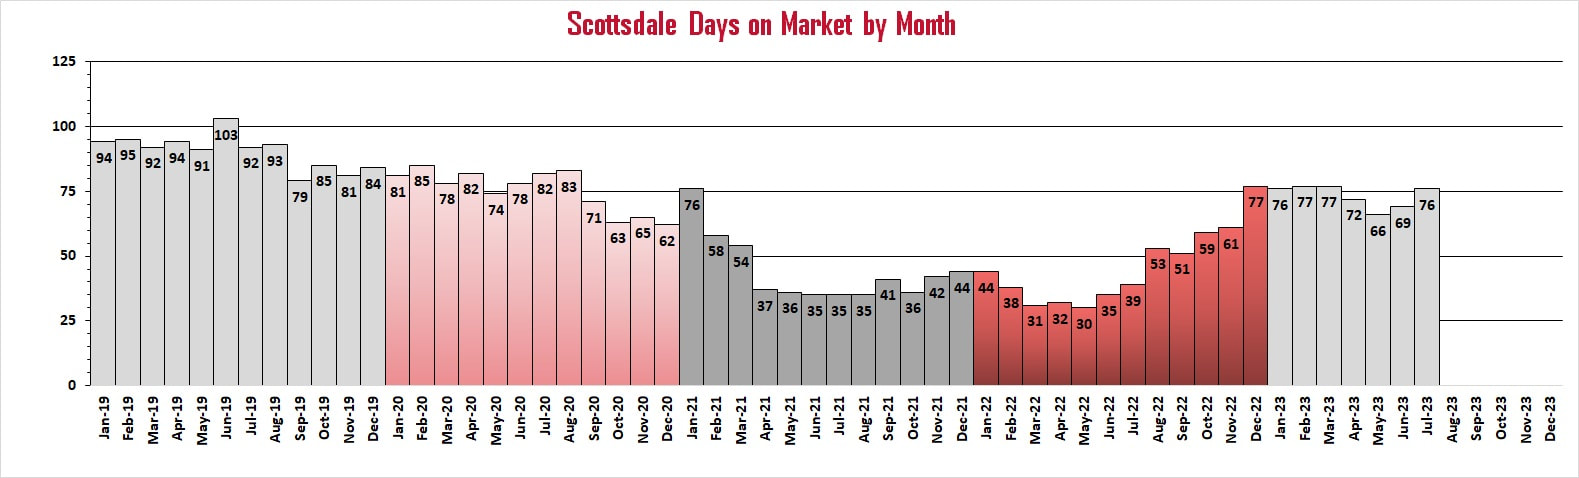 Scottsdale Arizona Days on Market by Month | Troy Erickson Realtor